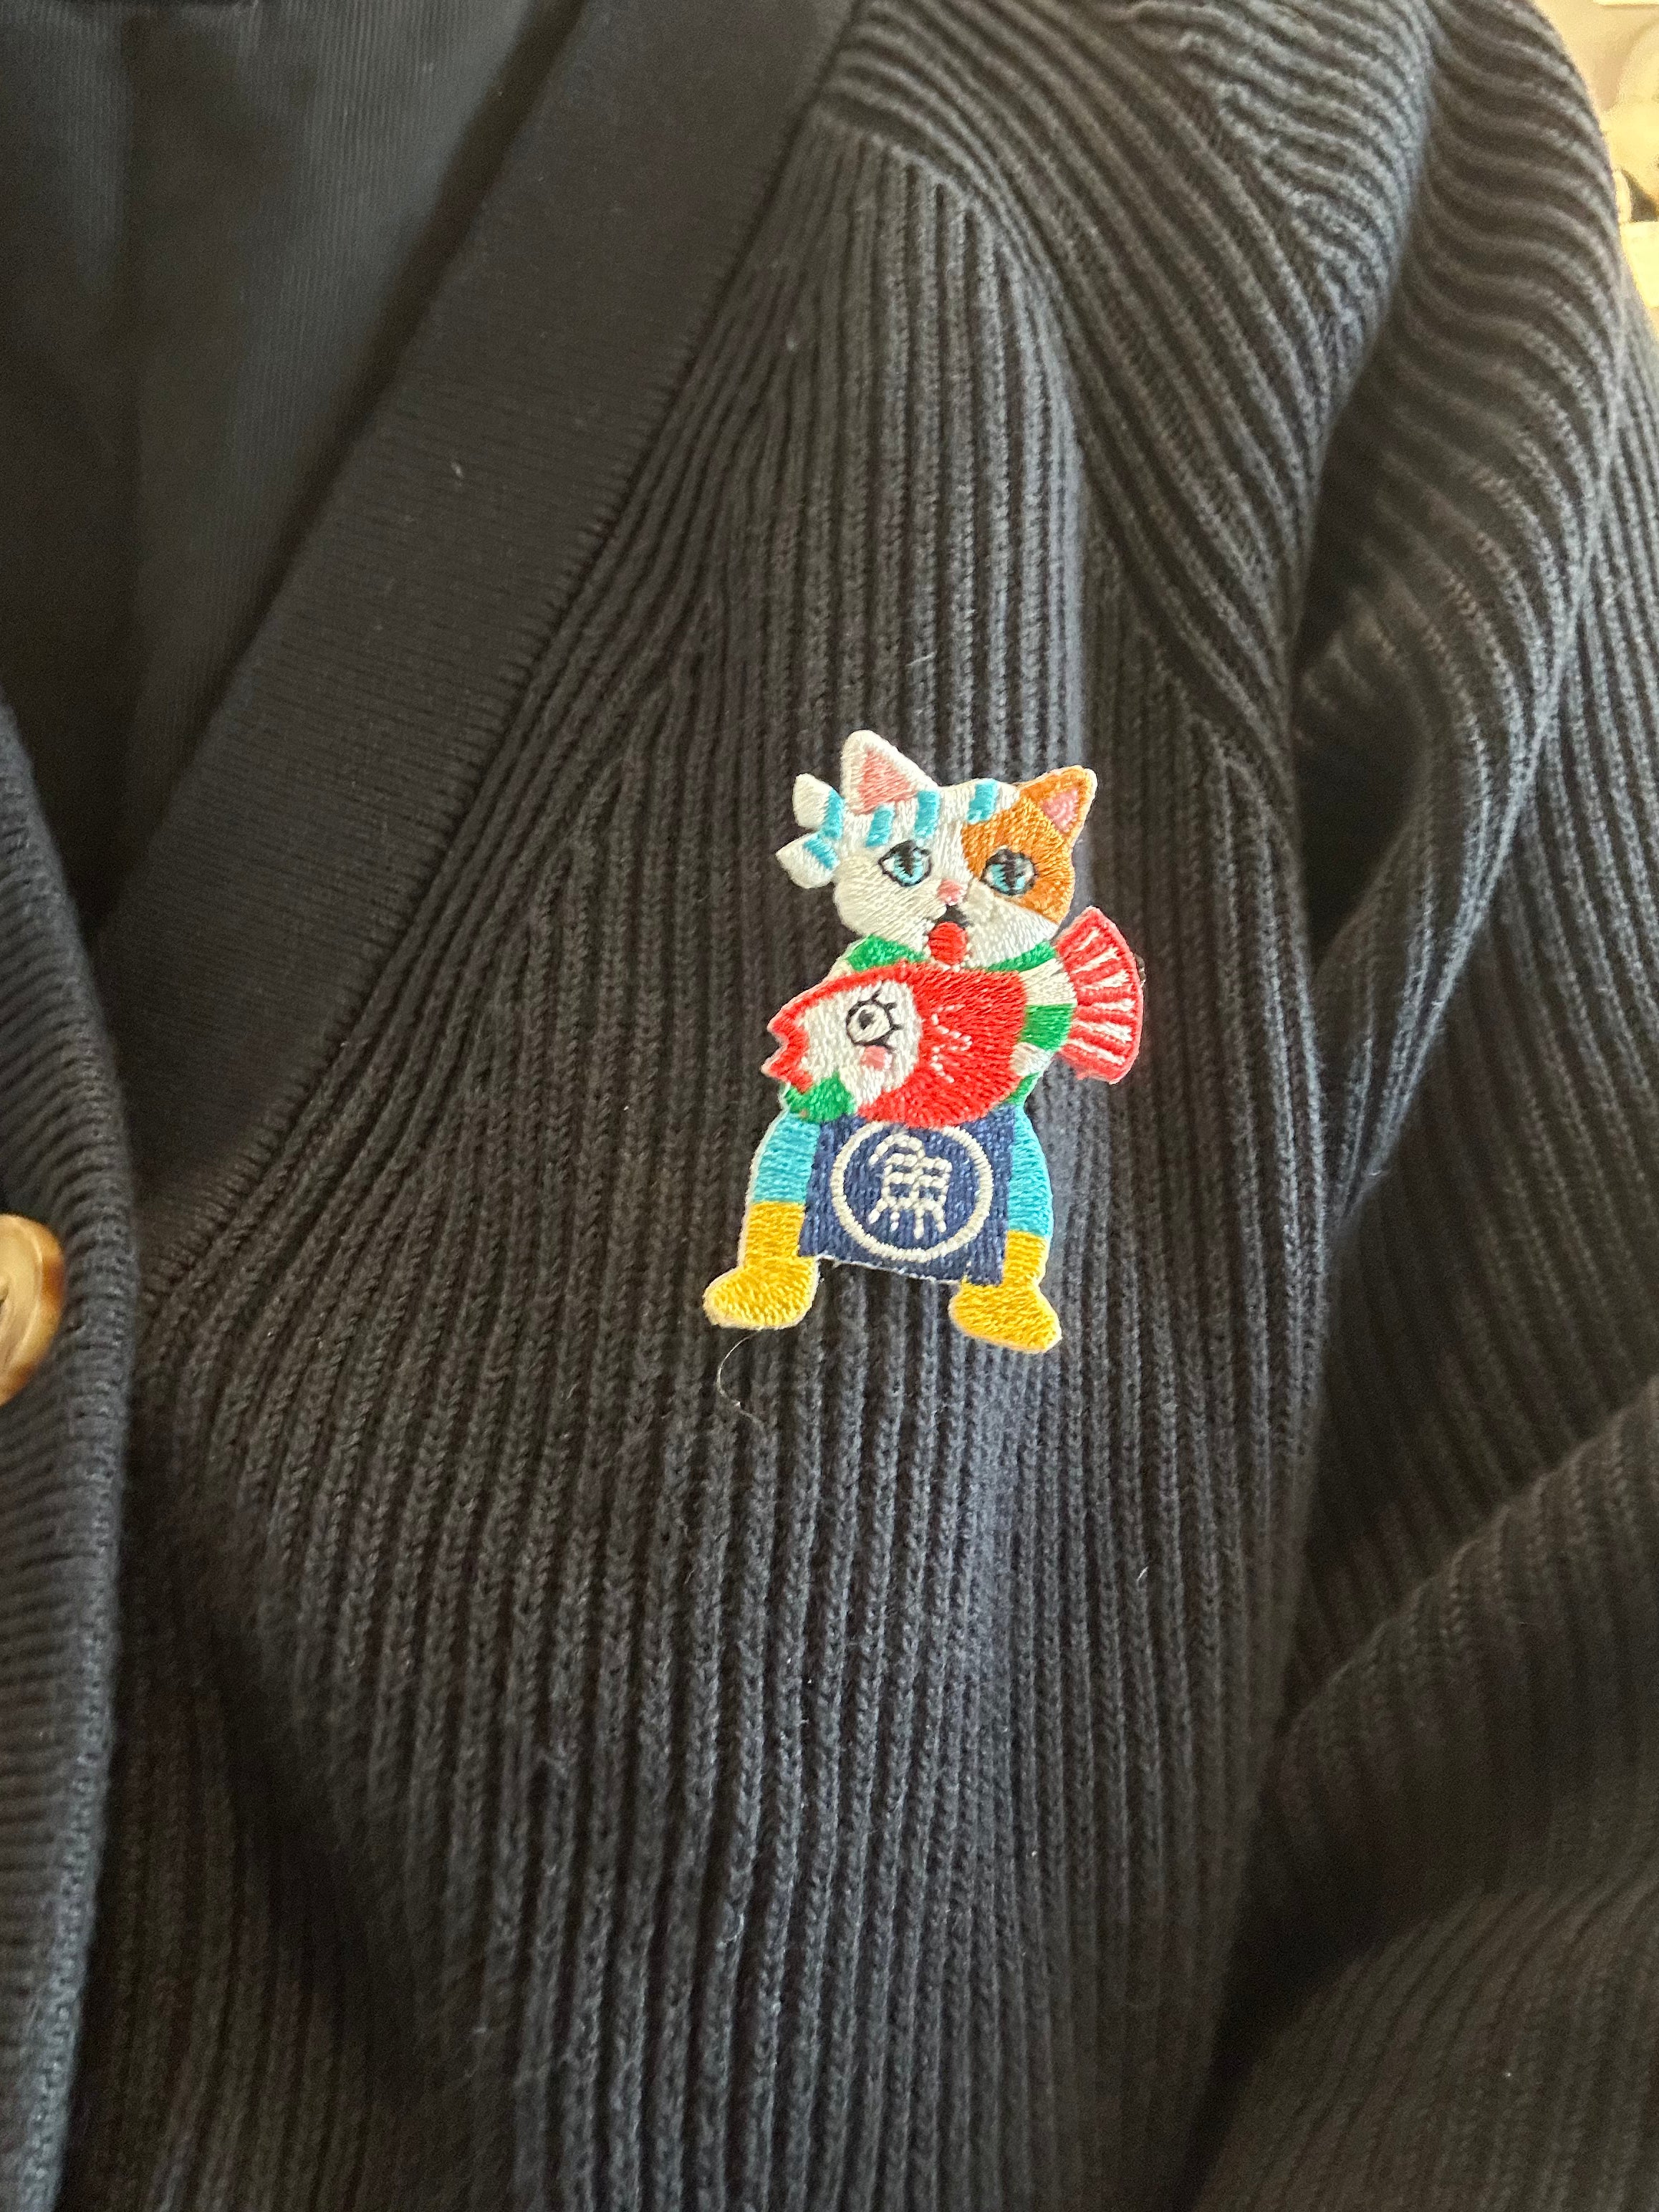 Embroidered Cat Pin Badge - Japanese Fishmonger Cat